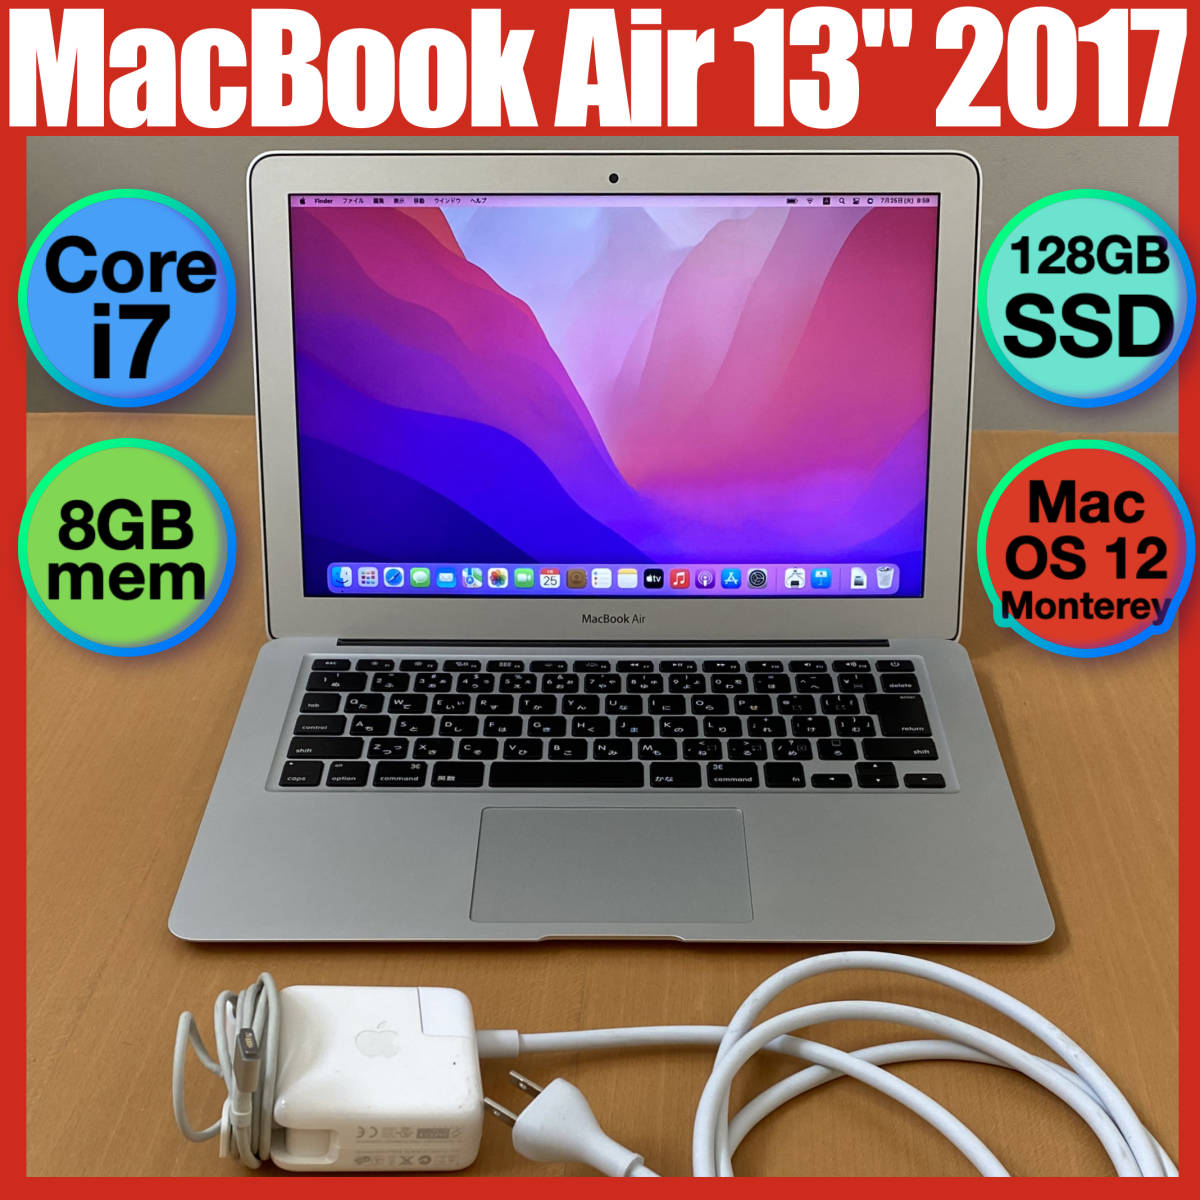 Løft dig op crush Foran dig Apple MacBook Air 13インチ 2017 シルバー Core i7 / 8GB mem / 128GB SSD / macOS 12  Monterey / USB 3 / Thunderbolt 2 / MQD32J/A(MacBook Air)｜売買されたオークション情報、ヤフオク!  の商品情報をアーカイブ公開 - オークファン（aucfan.com）